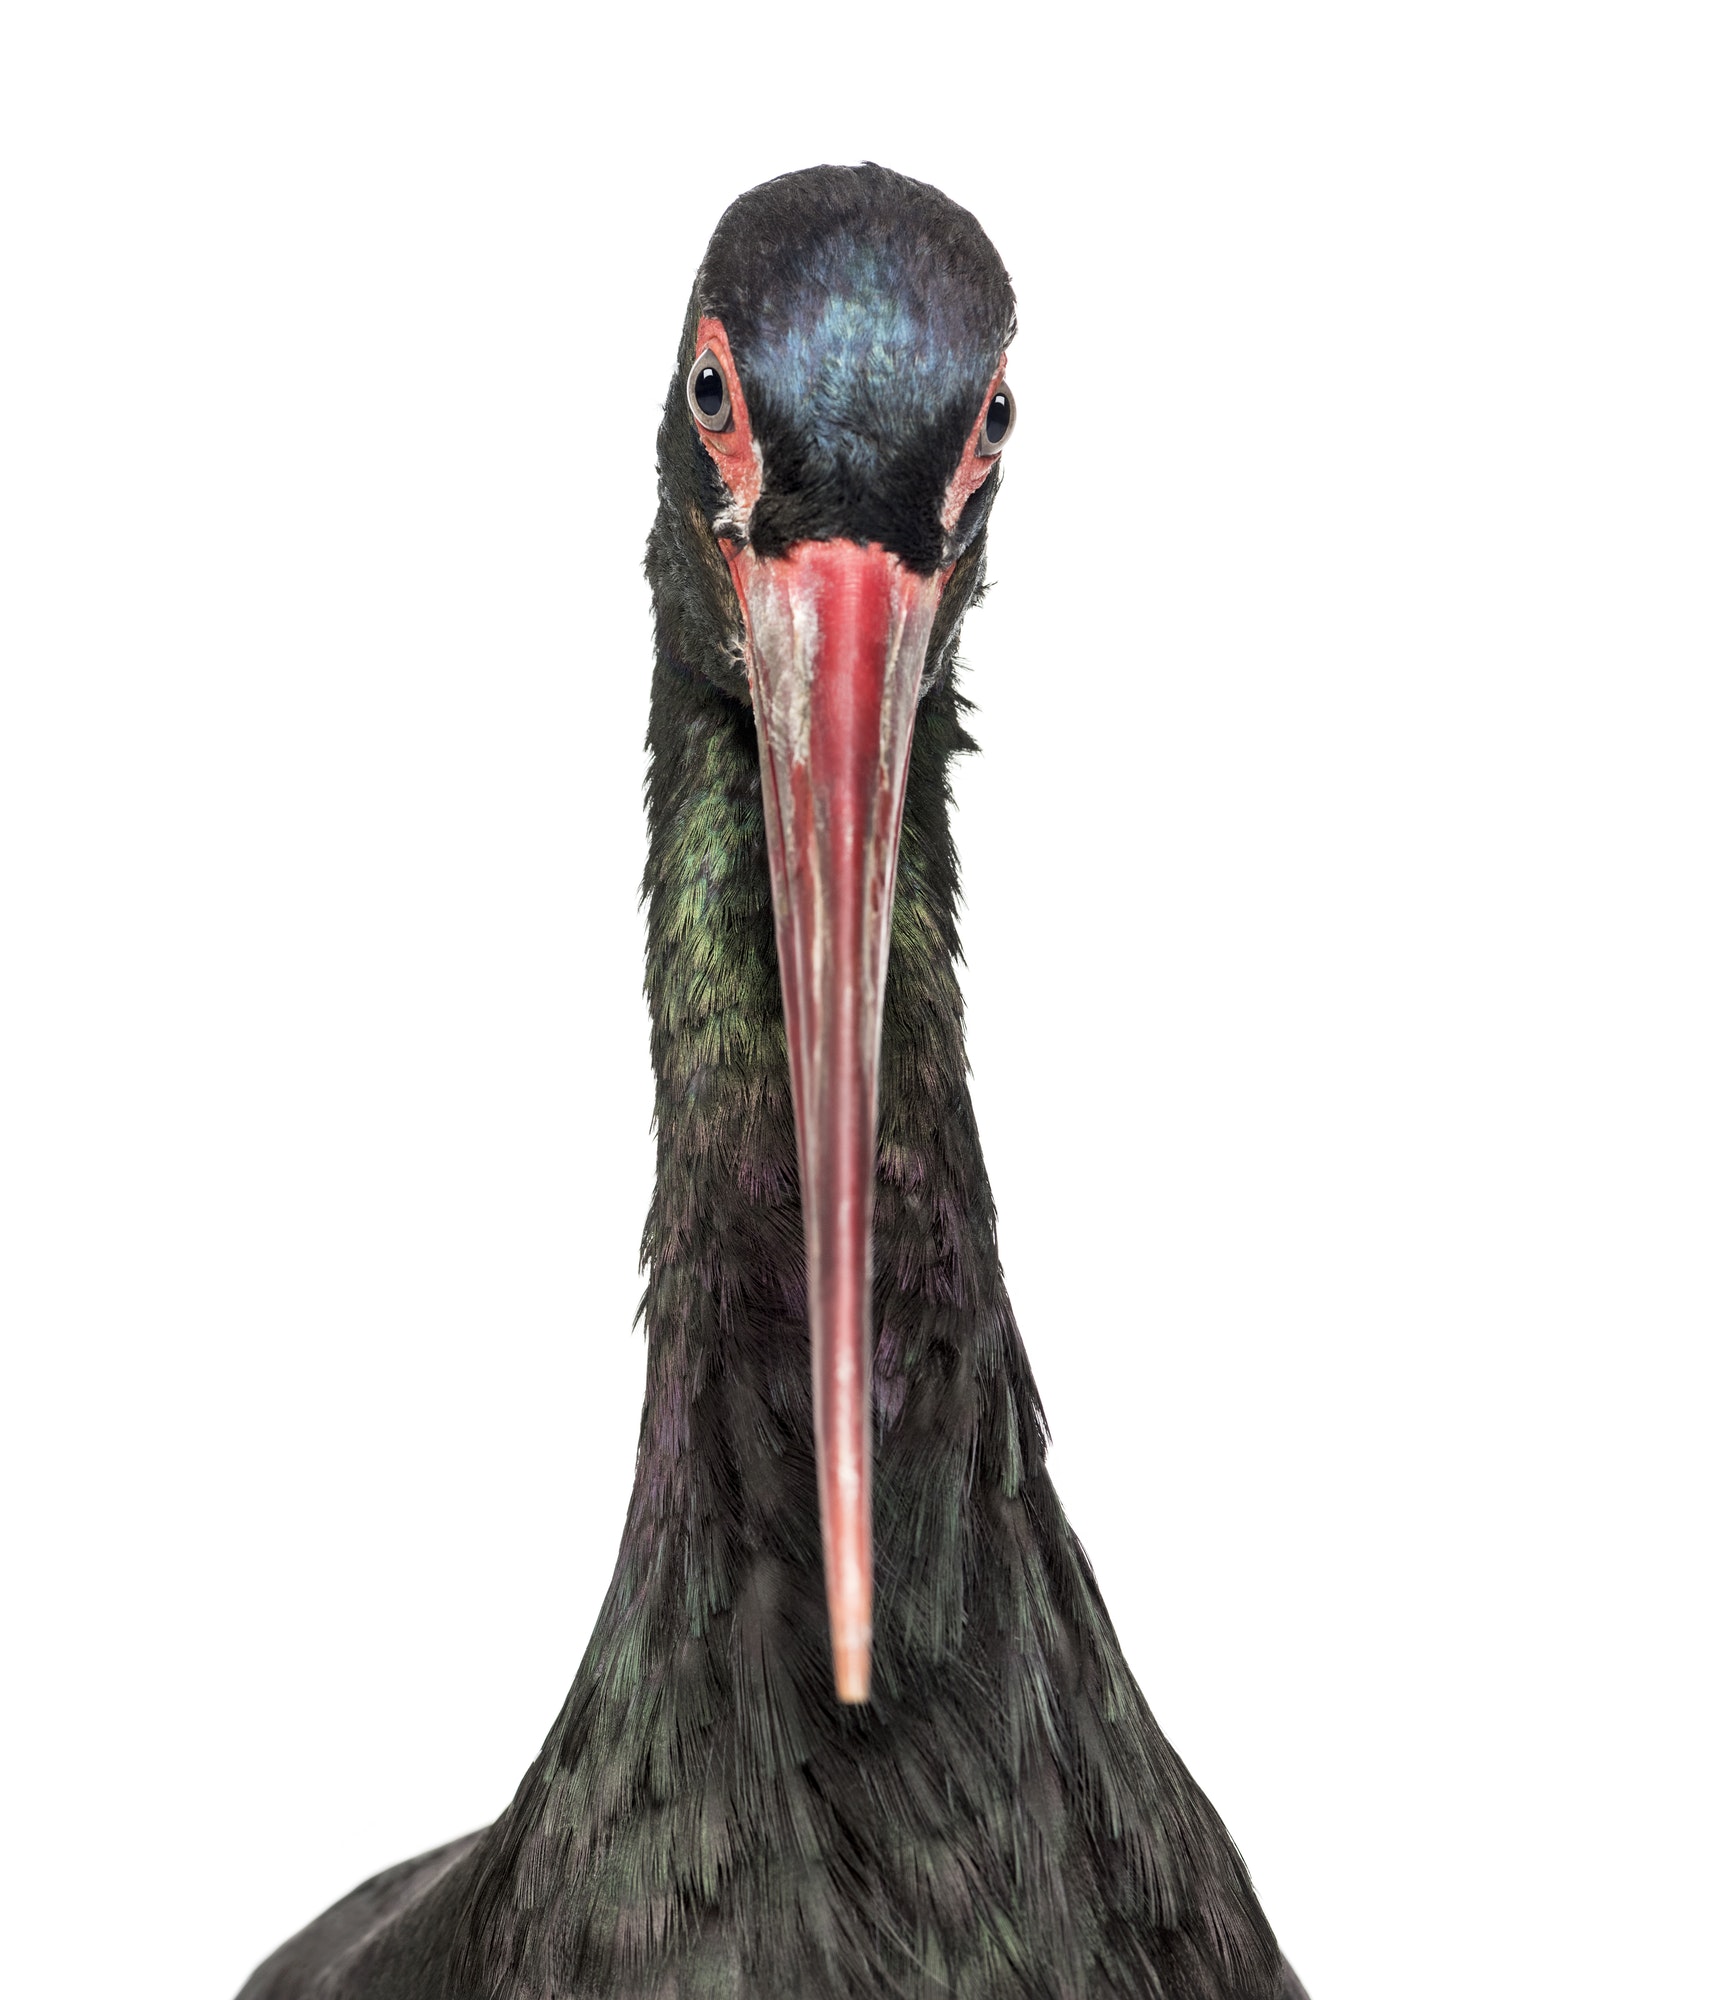 Black stork, Ciconia nigra, against white background